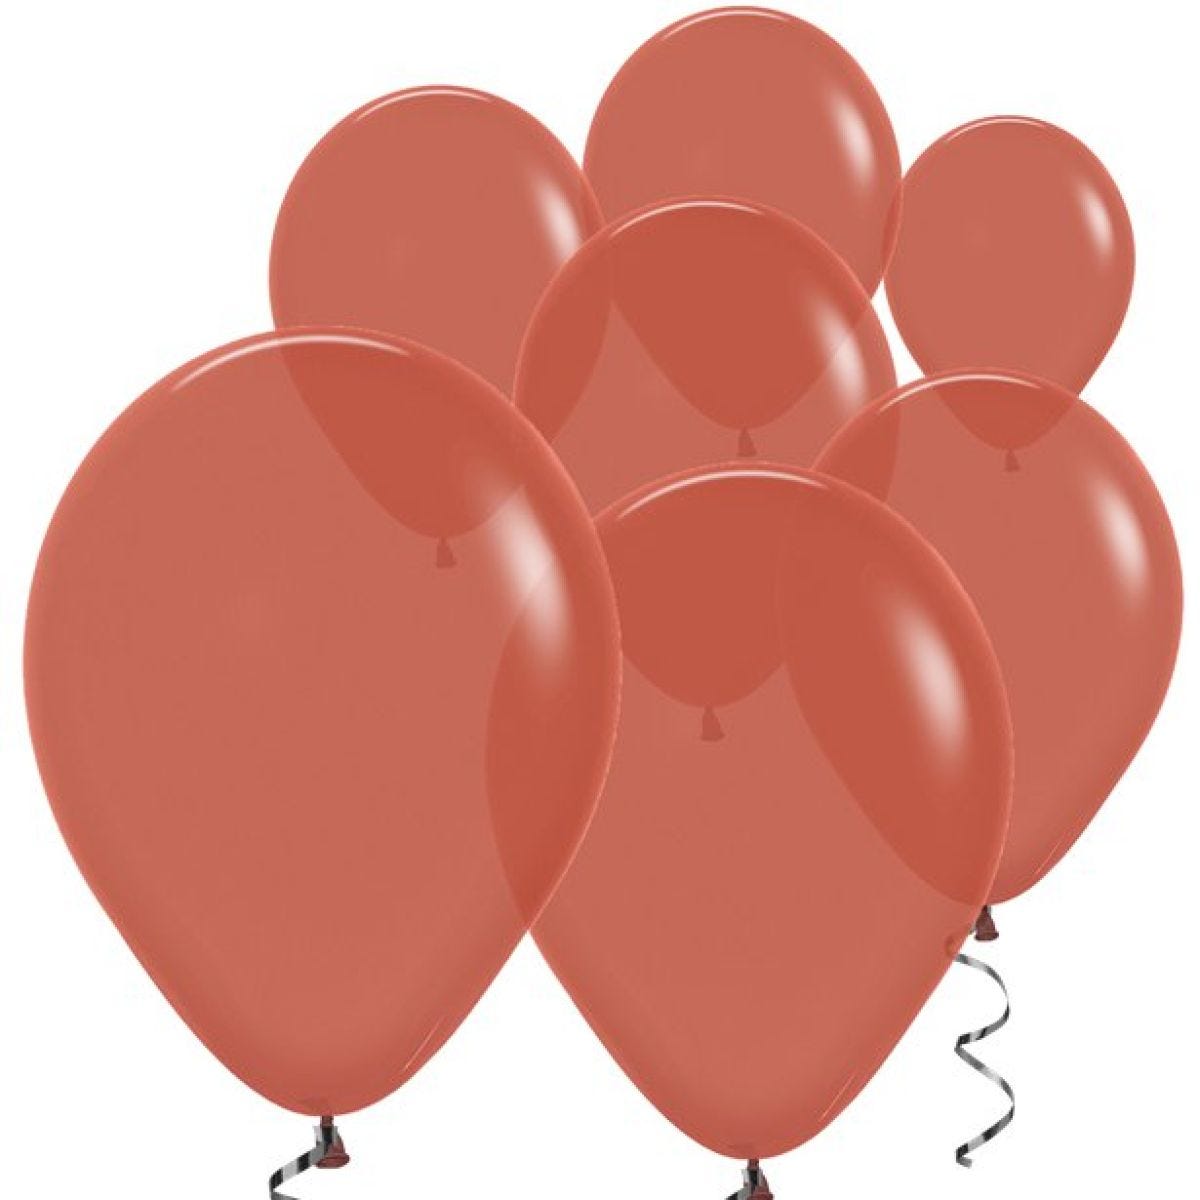 Terracotta Balloons - 5" Latex